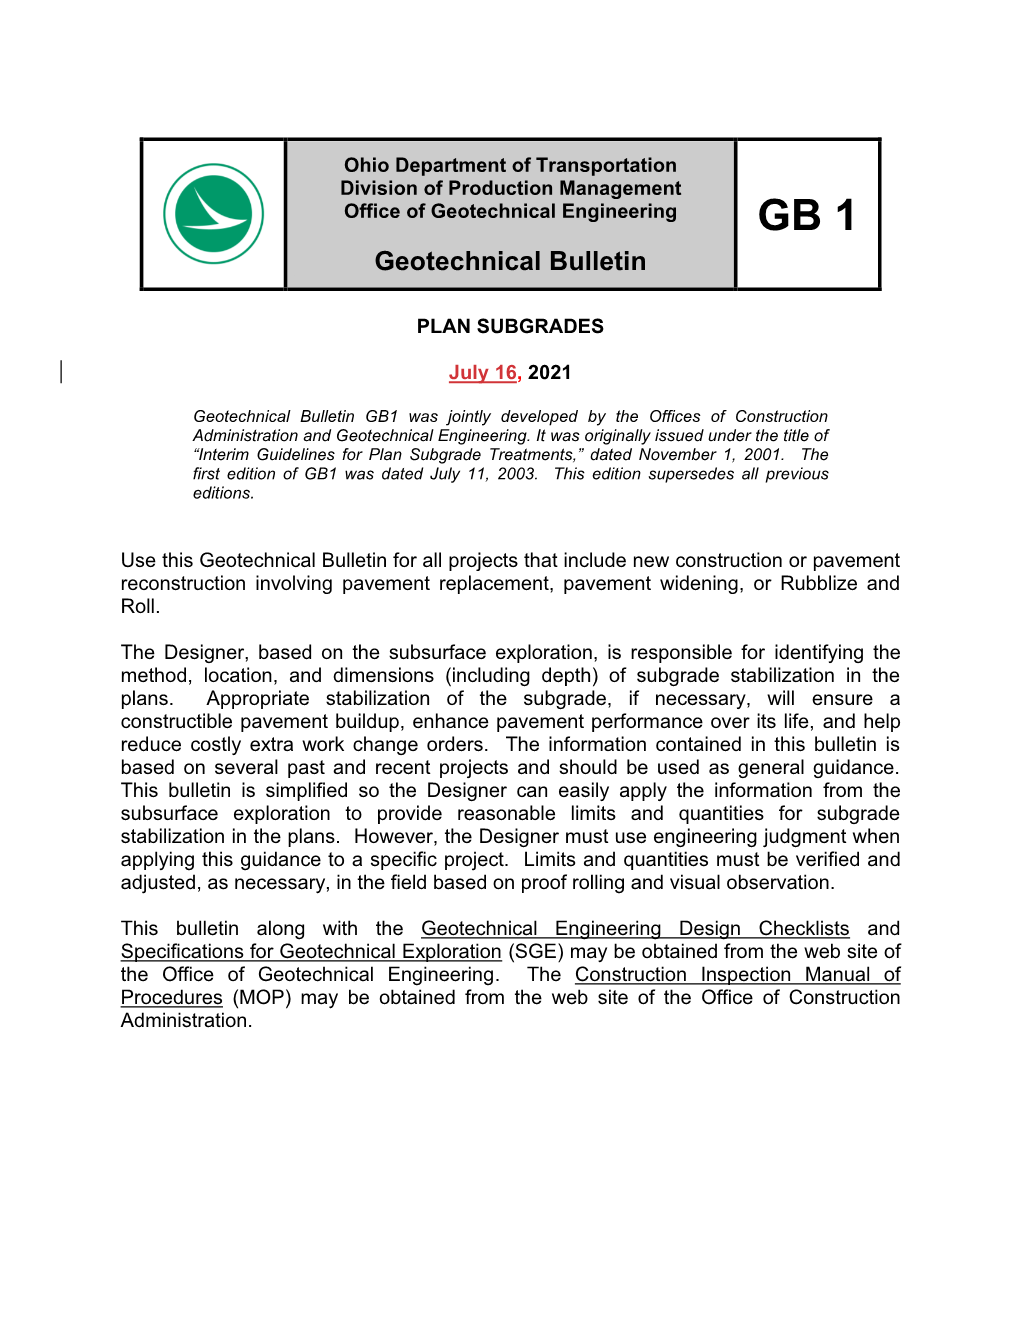 Geotechnical Bulletin 1, Plan Subgrades